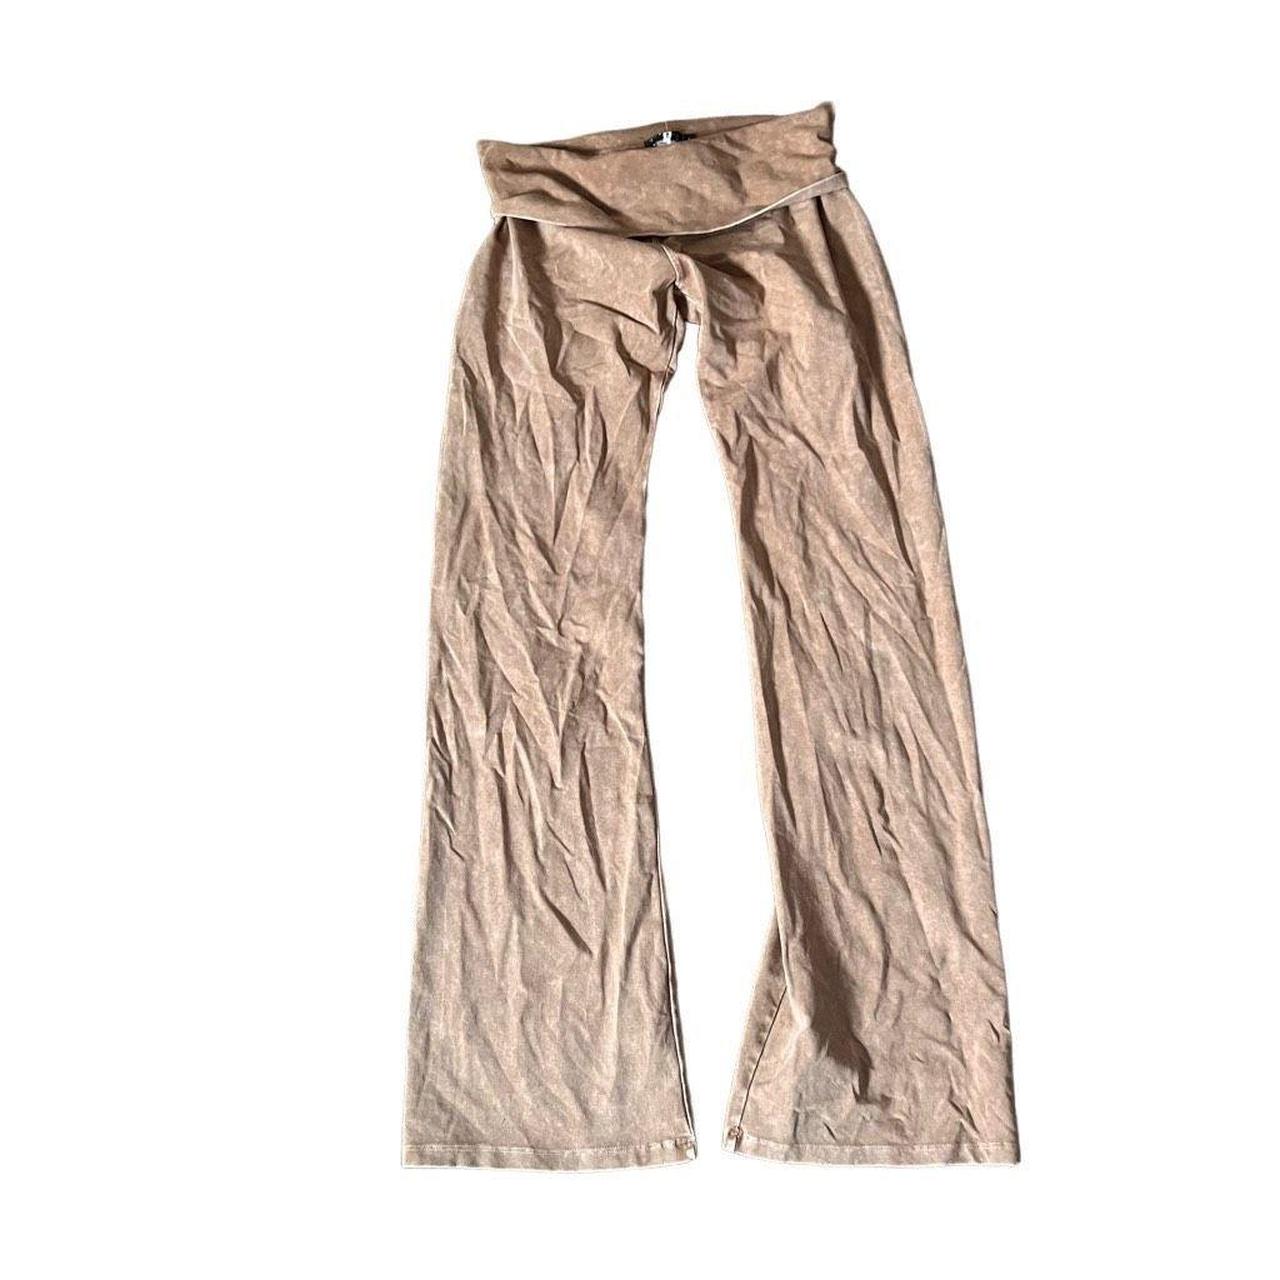 Brown stretchy flare leg yoga pants/ leggings with - Depop